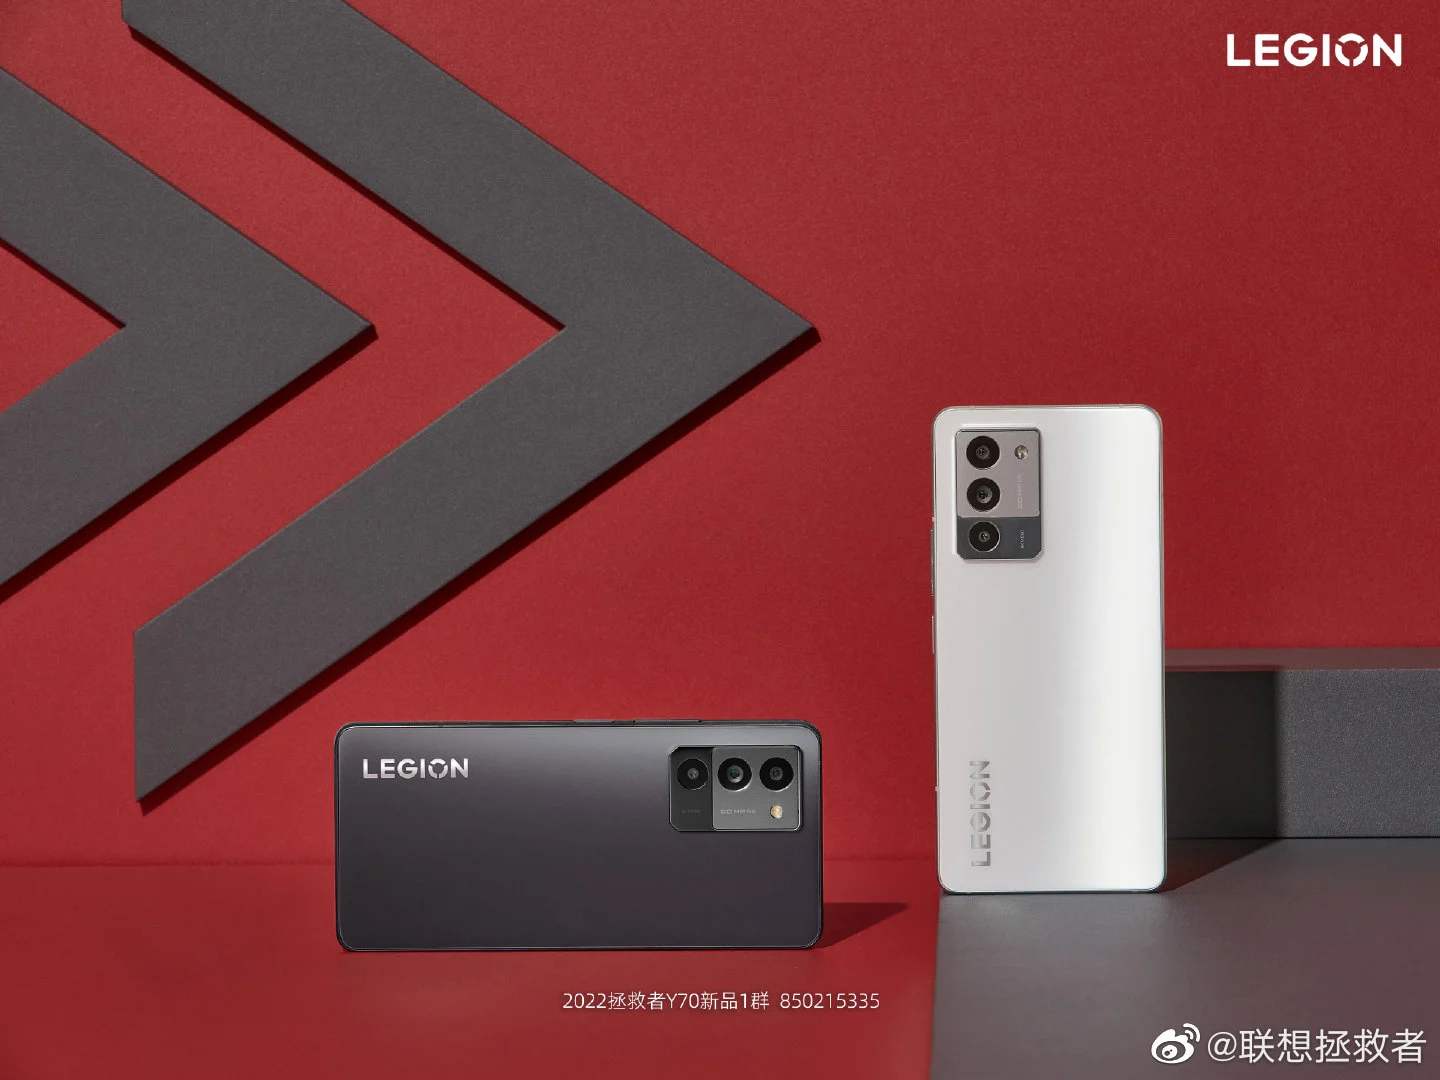 Lenovo Legion Y70 Titanium Crystal Grey and Ice Soul White 1 قطب آی تی